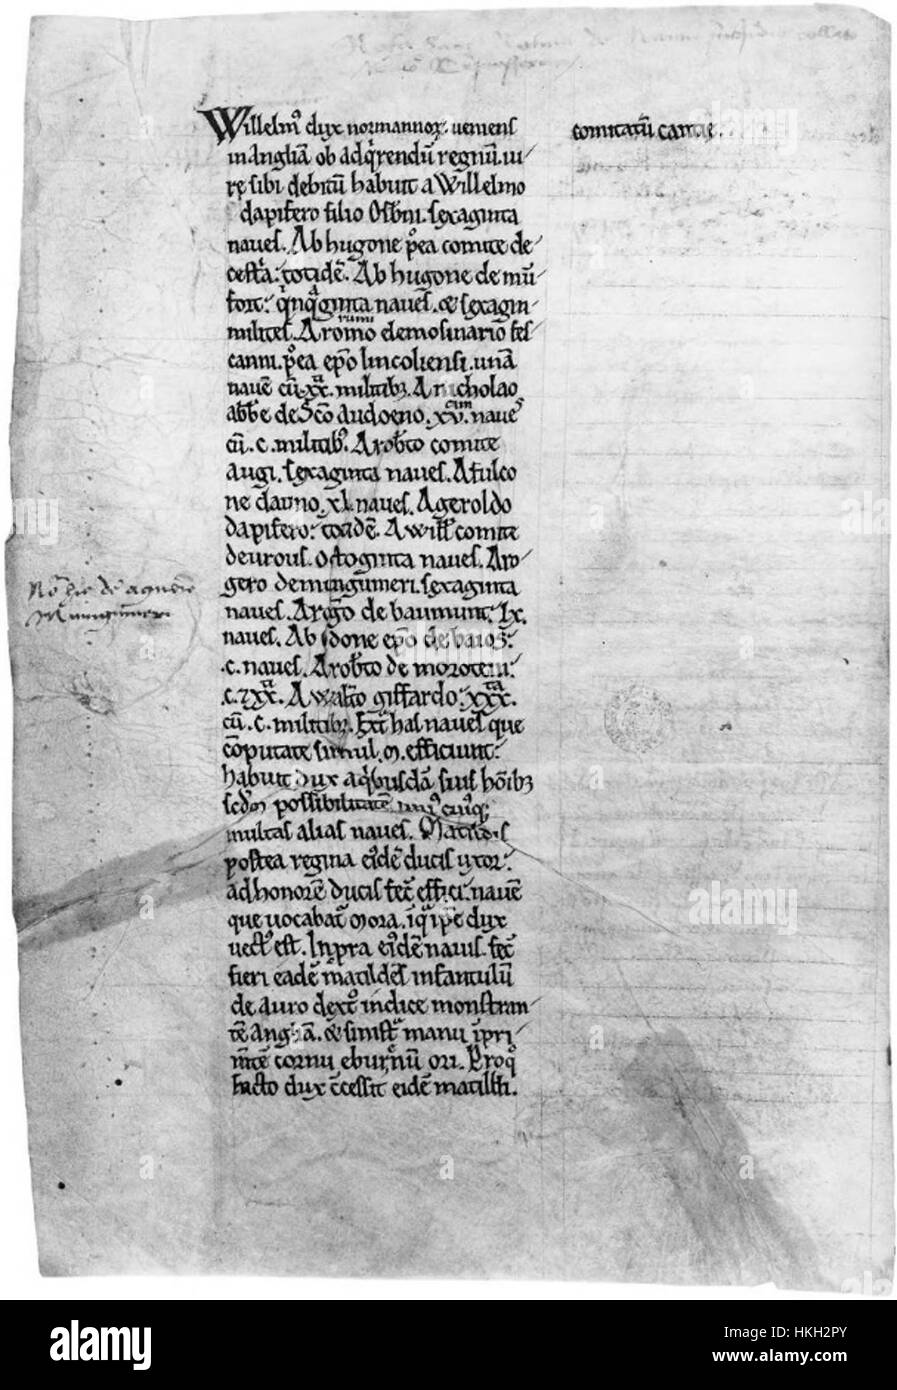 Enviar lista de Guillermo el Conquistador (Bodleian Library MS E Museo 93 folio 8V) Foto de stock